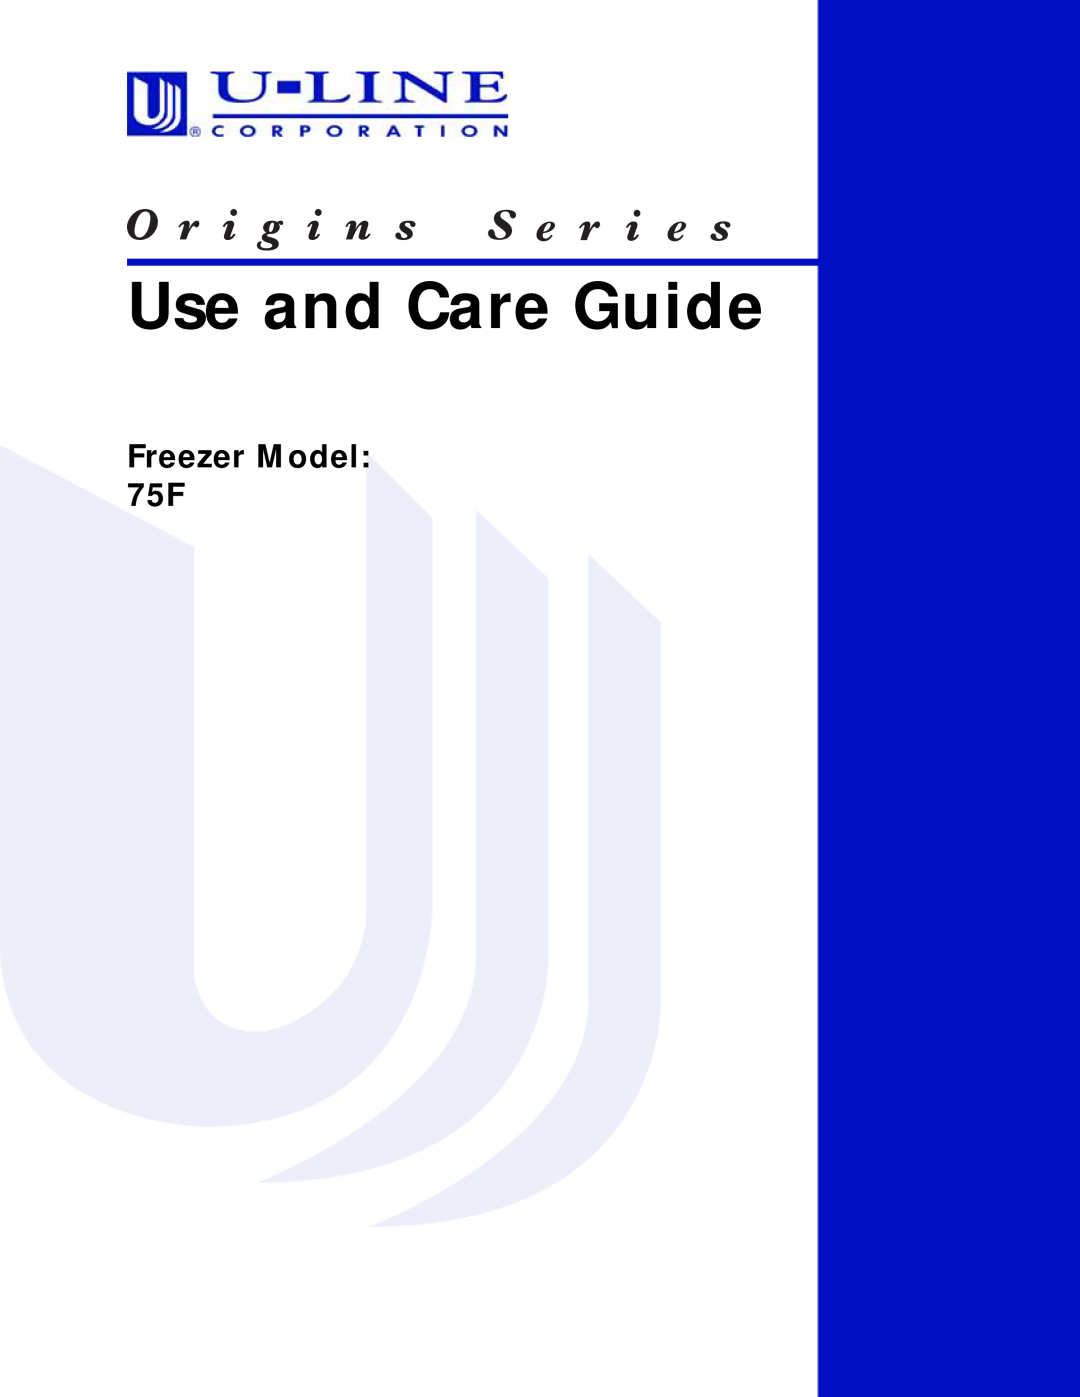 U-Line manual Use and Care Guide, Freezer Model 75F 